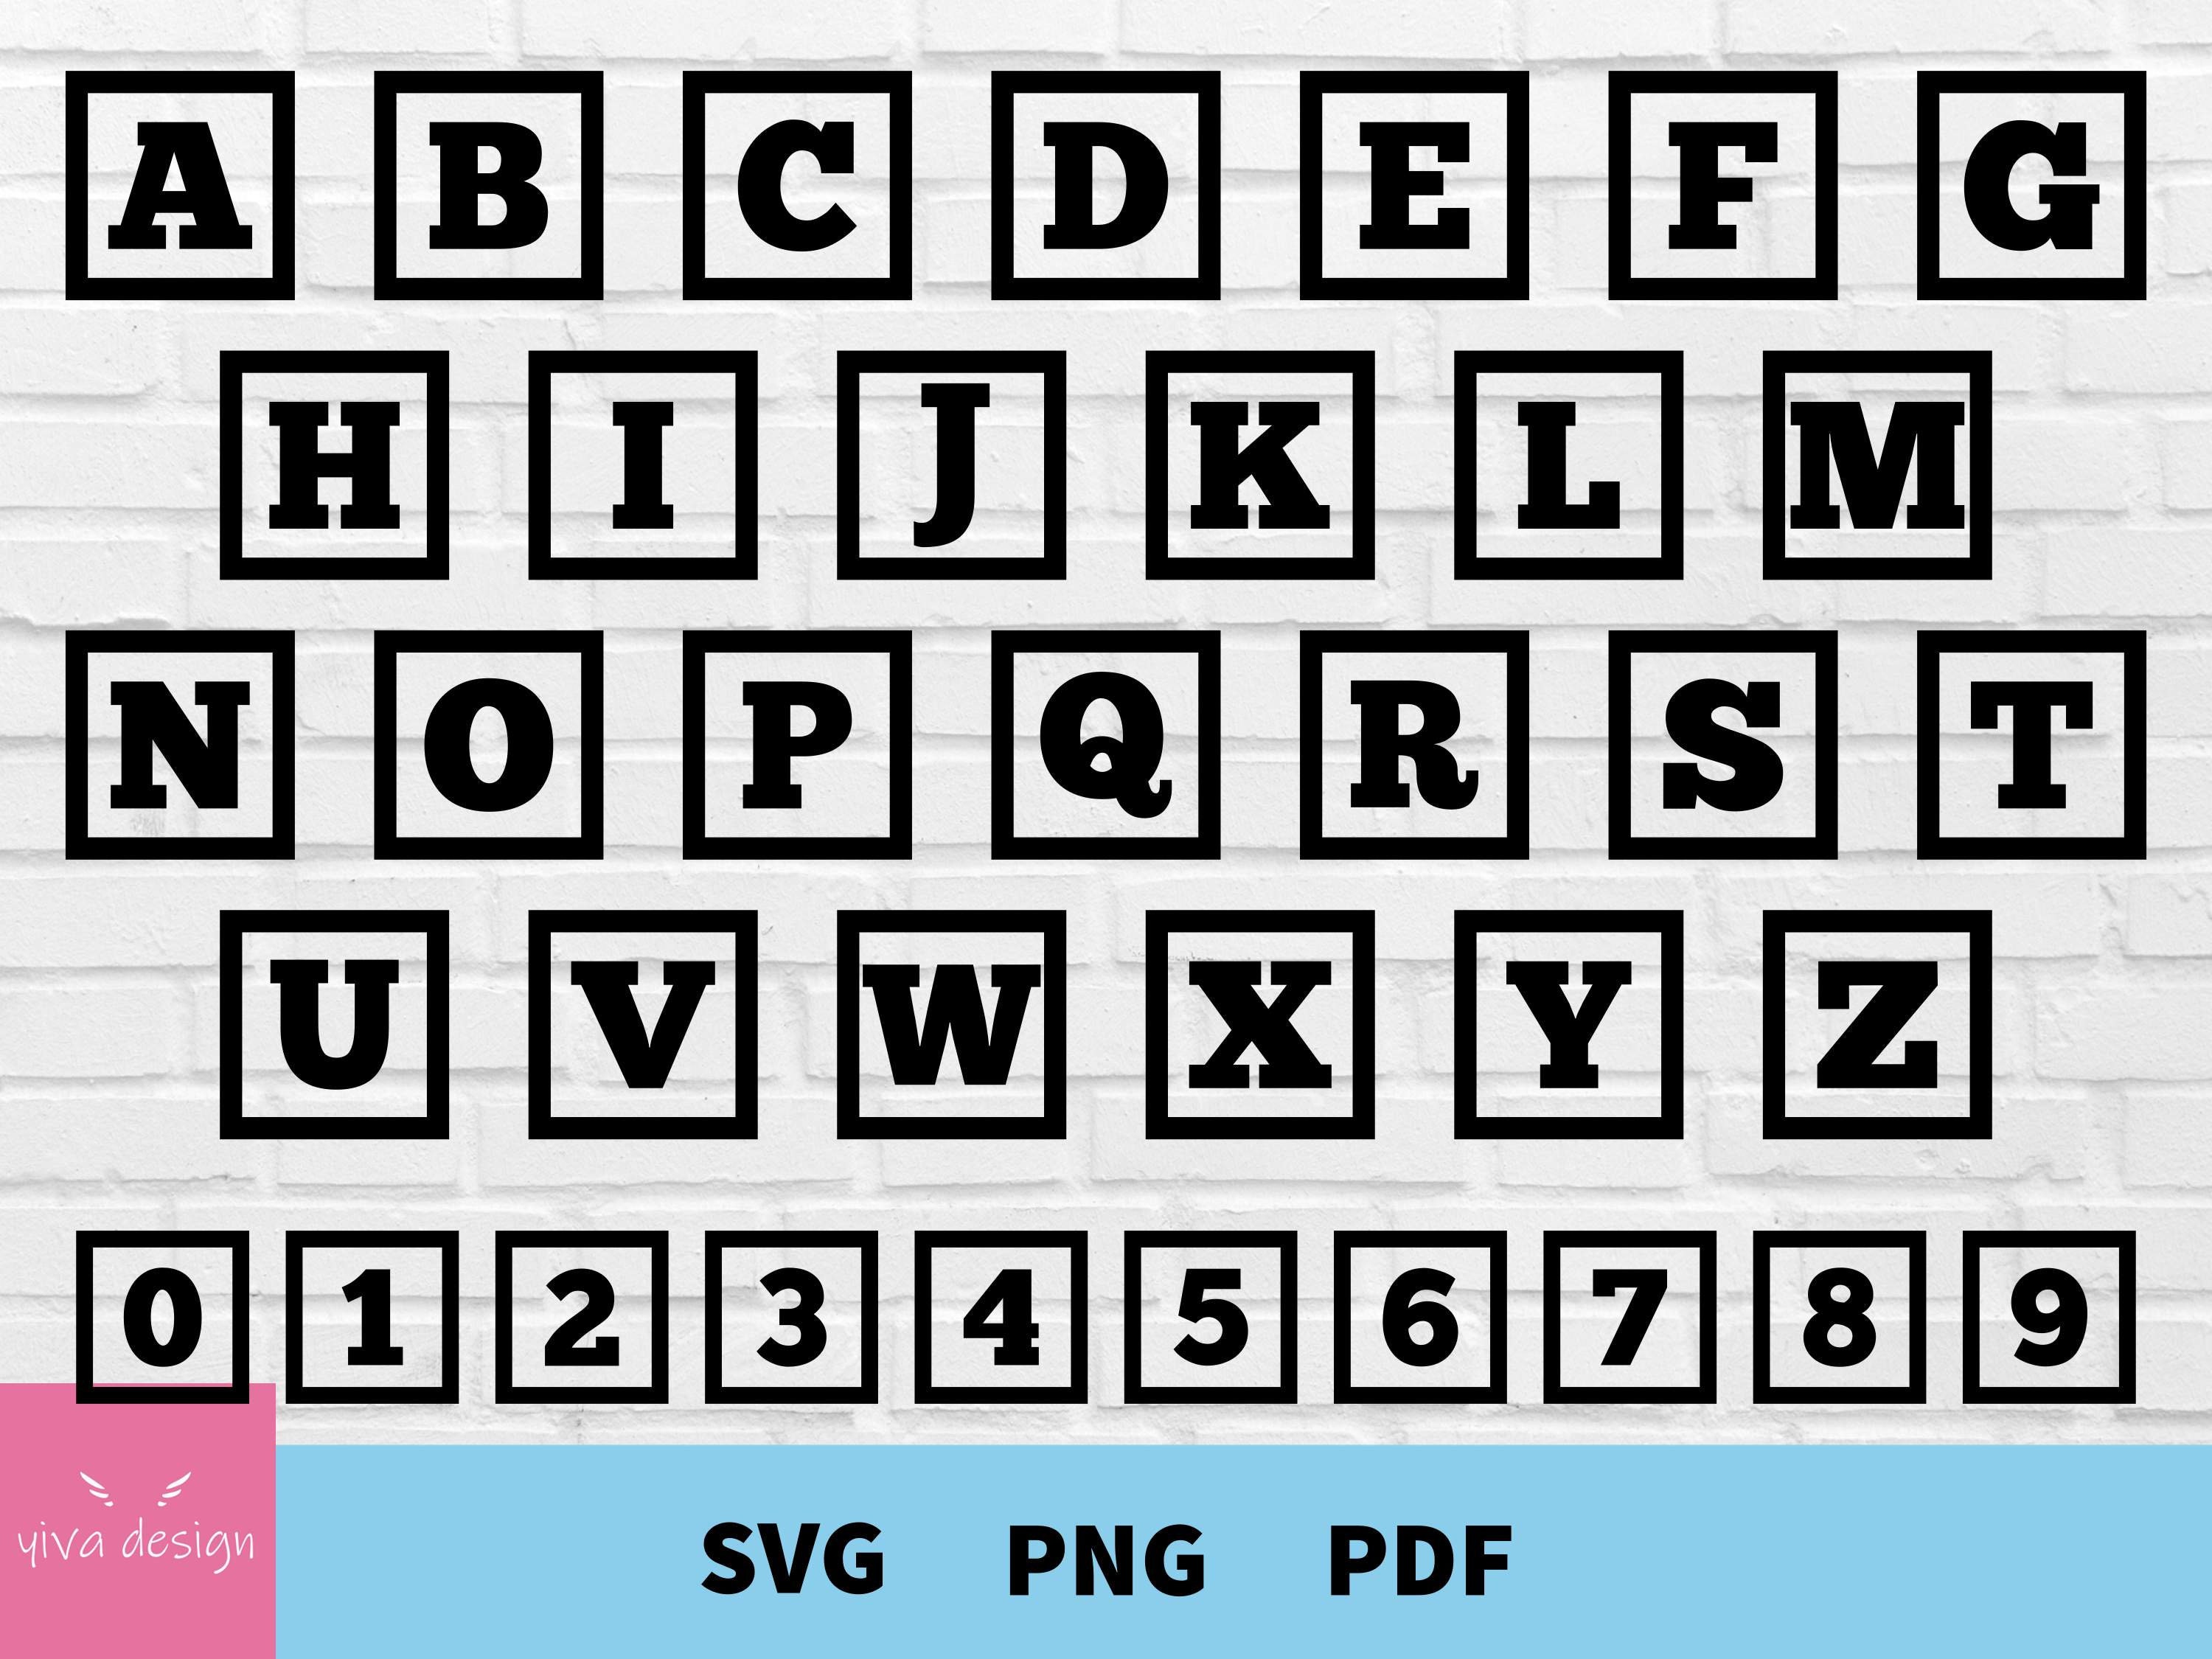 Block Alphabet